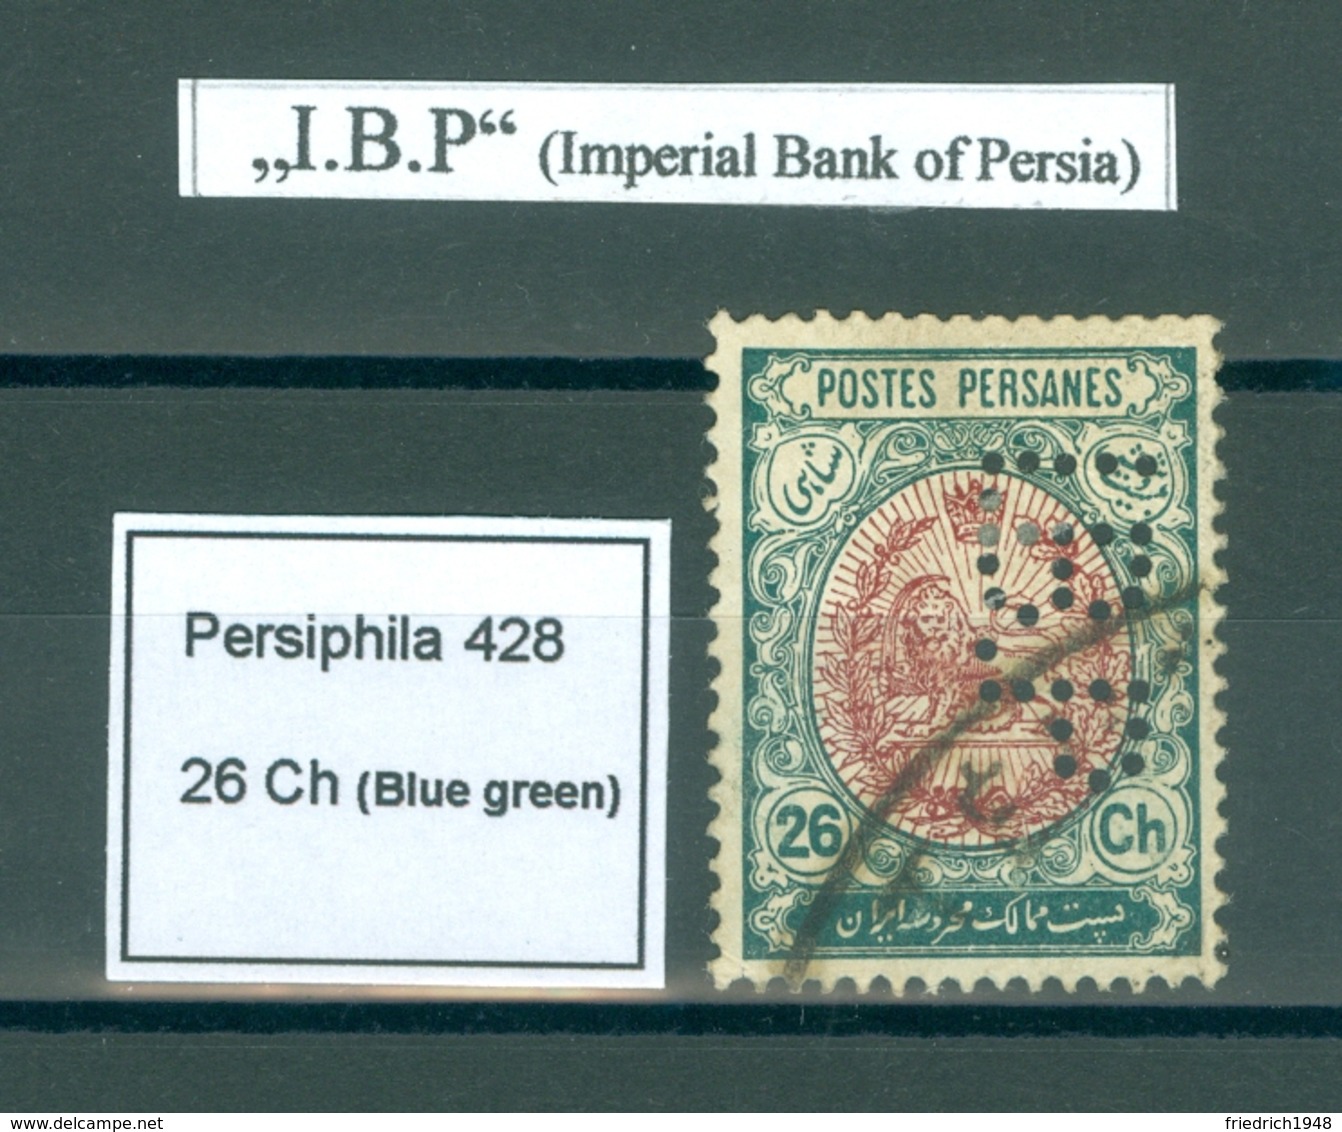 PERSIA - IRAN; Perfin " I B P "  (Imperial Bank Of Persia)  26 Chahis - Iran